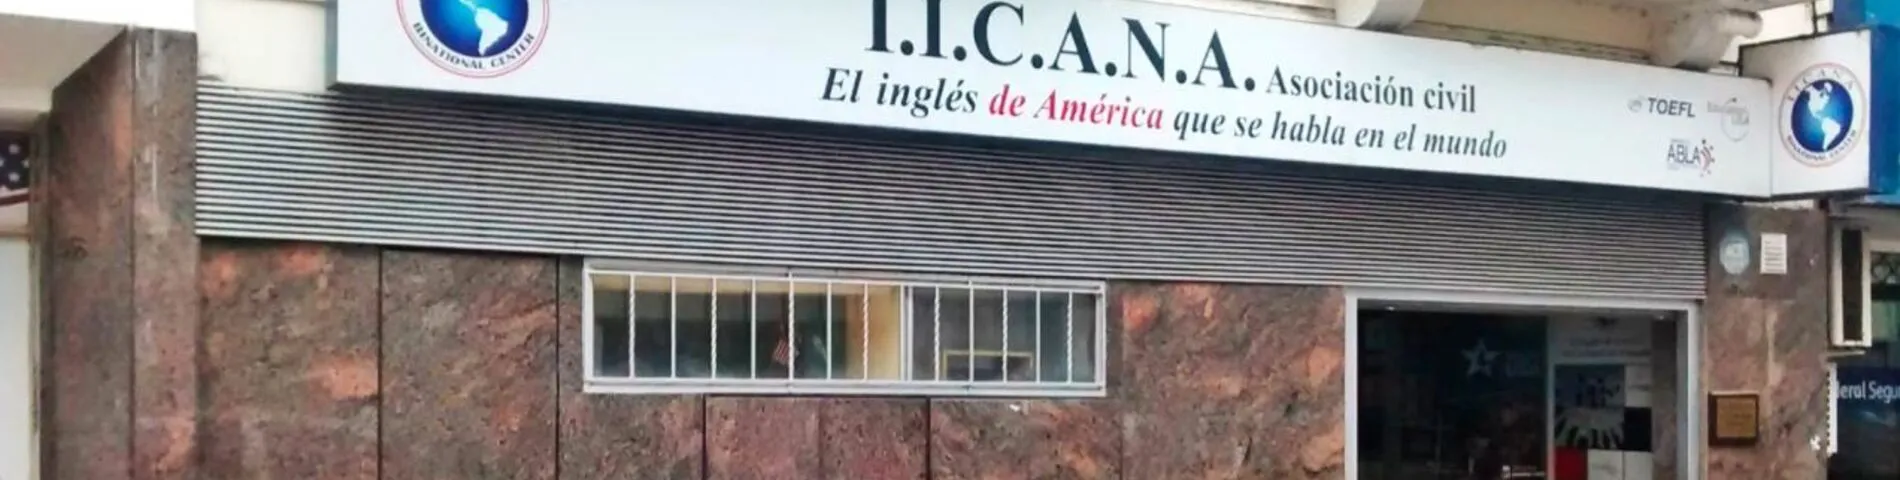 IICANA - Instituto de Intercambio Cultural Argentino Norteamericano picture 1